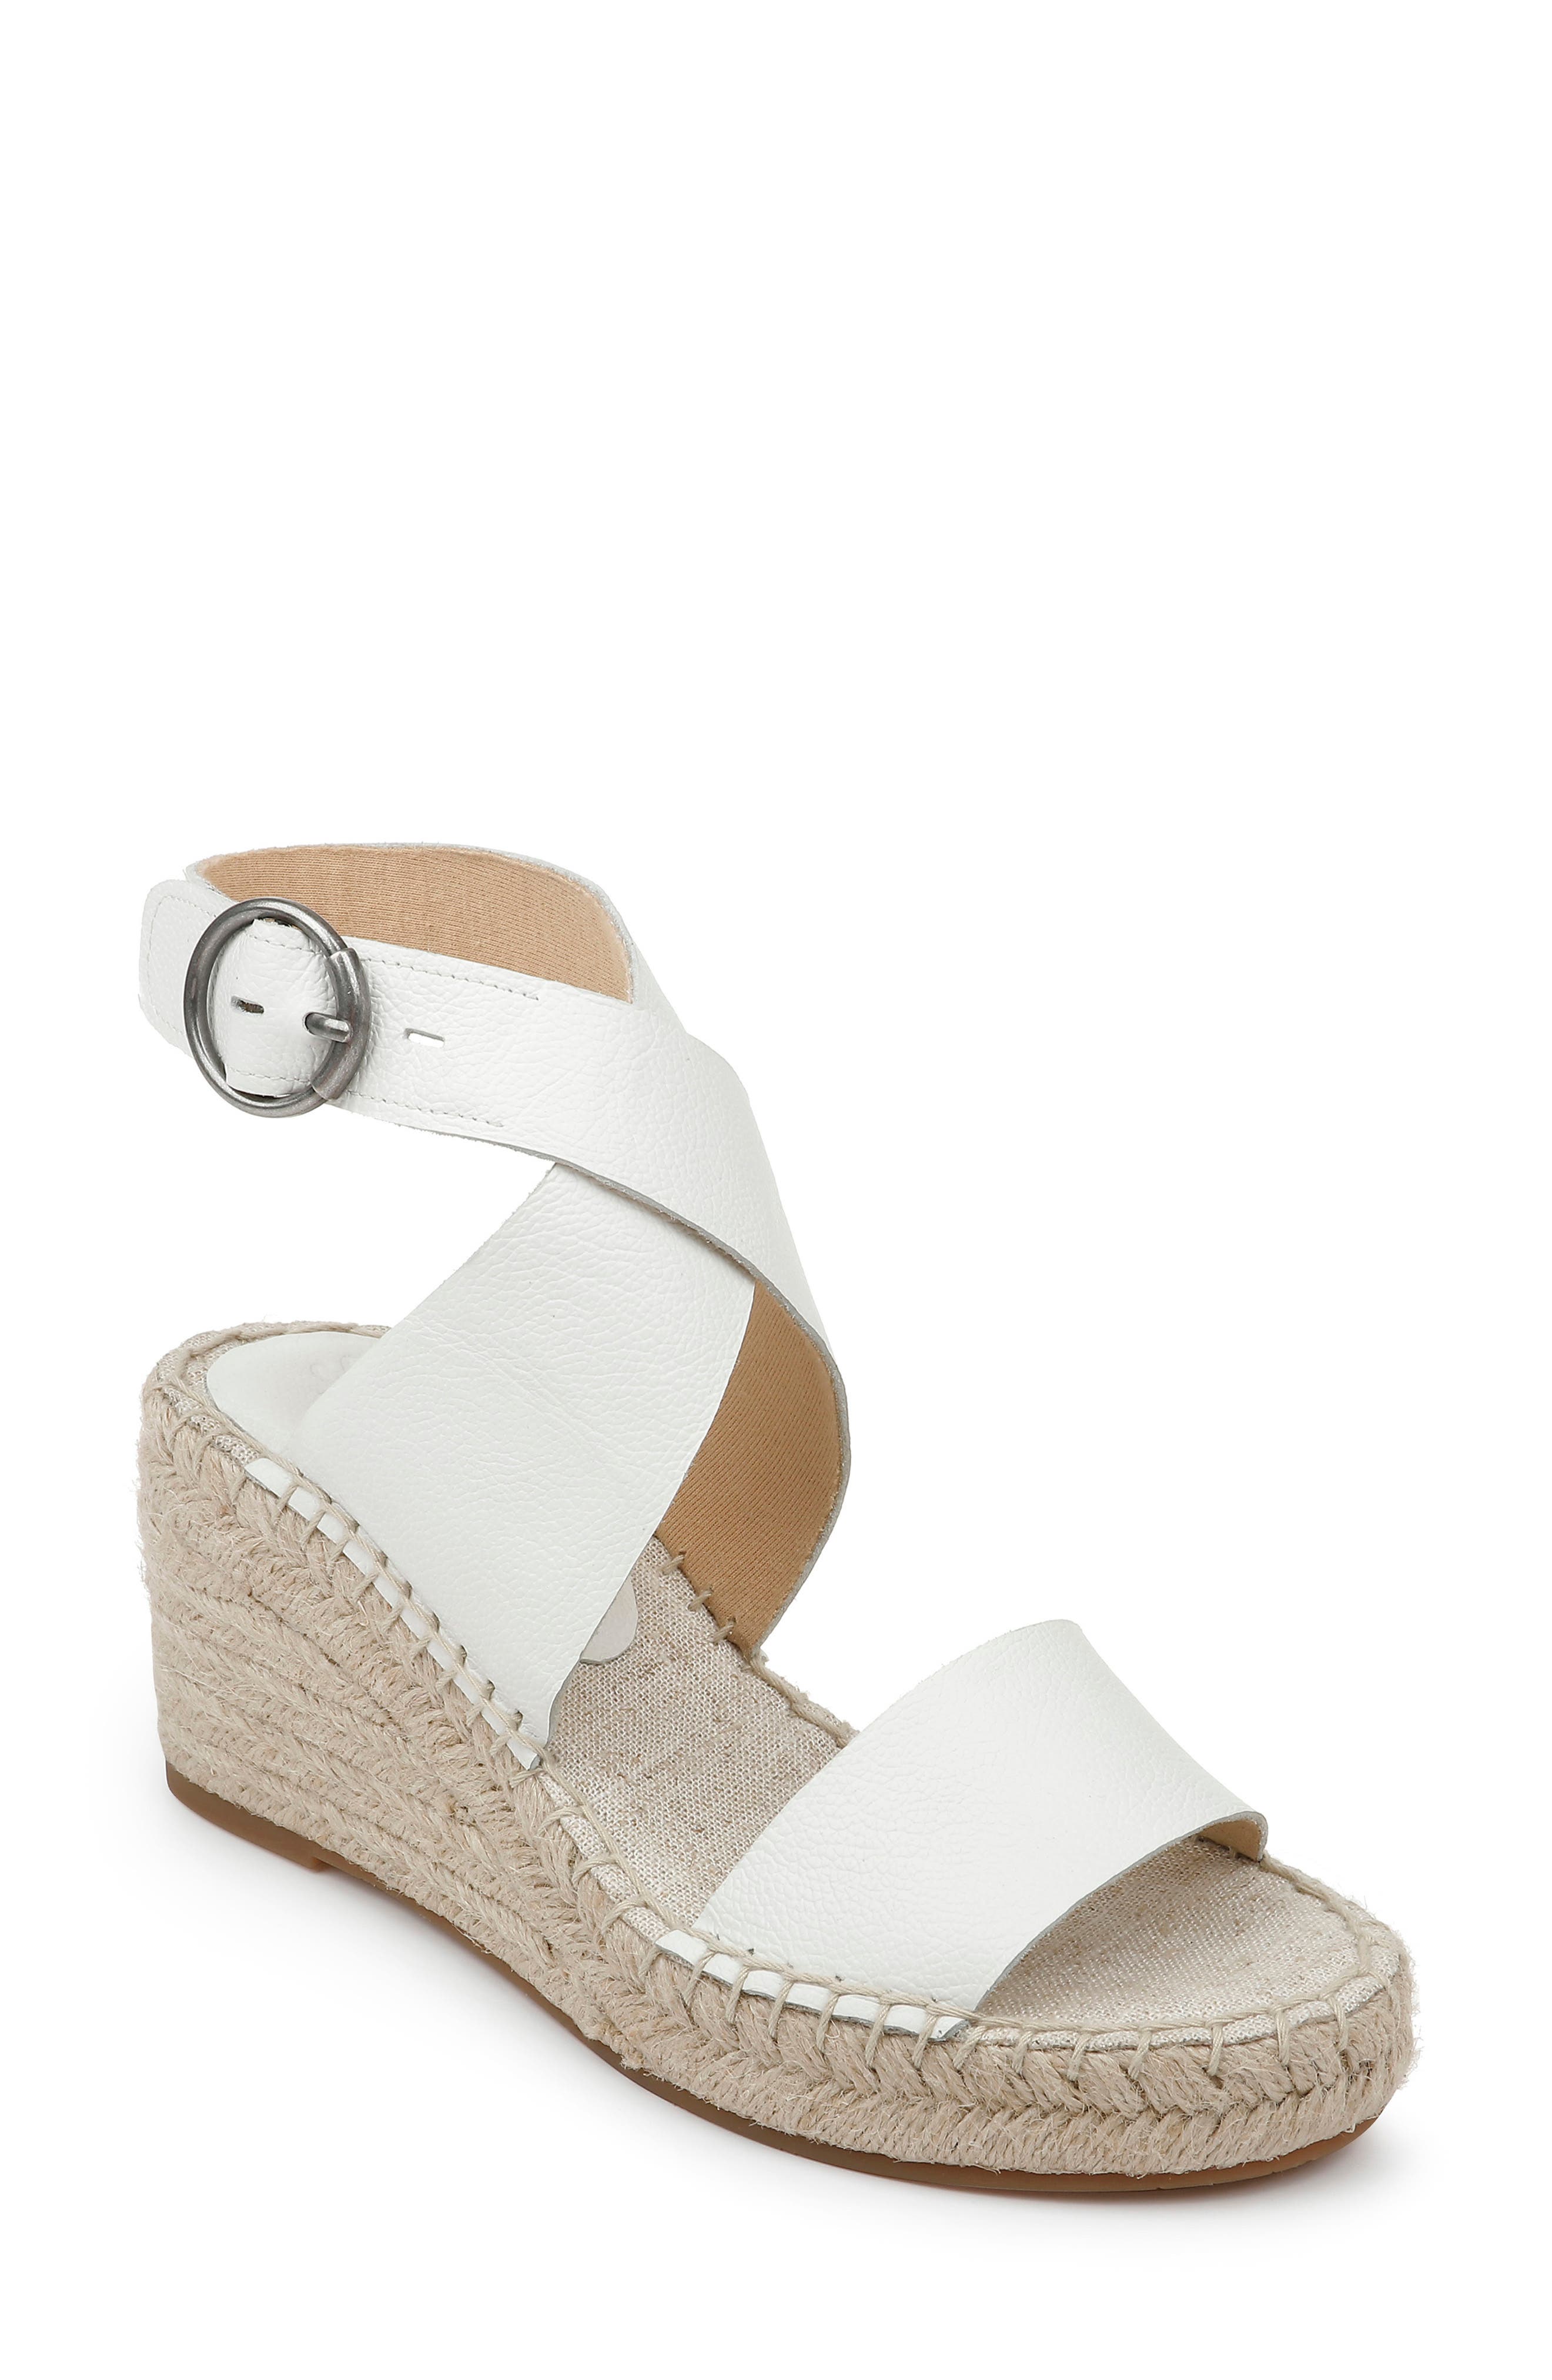 Splendid Addie Wedge Espadrille Sandal In White Leather